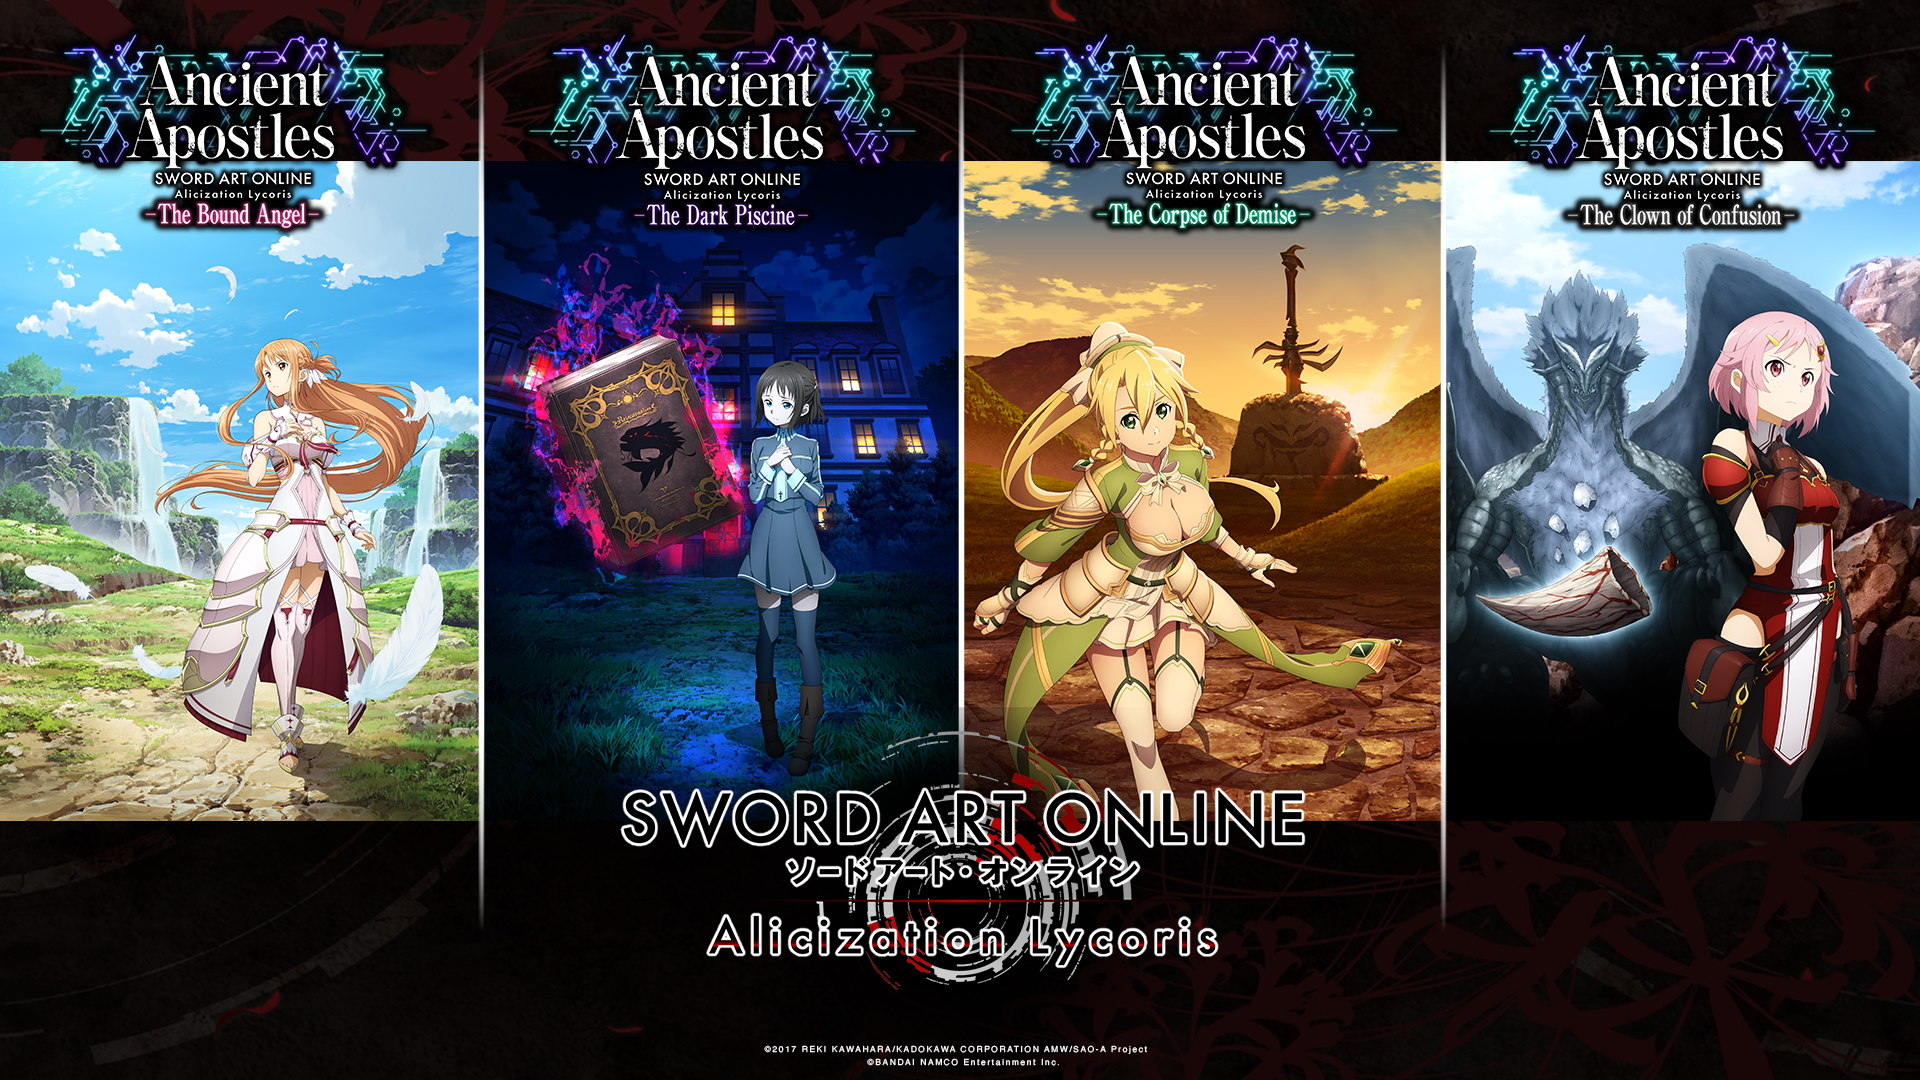 Sword Art Online: Last Recollection Details Editions, Ritual of Bonds DLC -  RPGamer